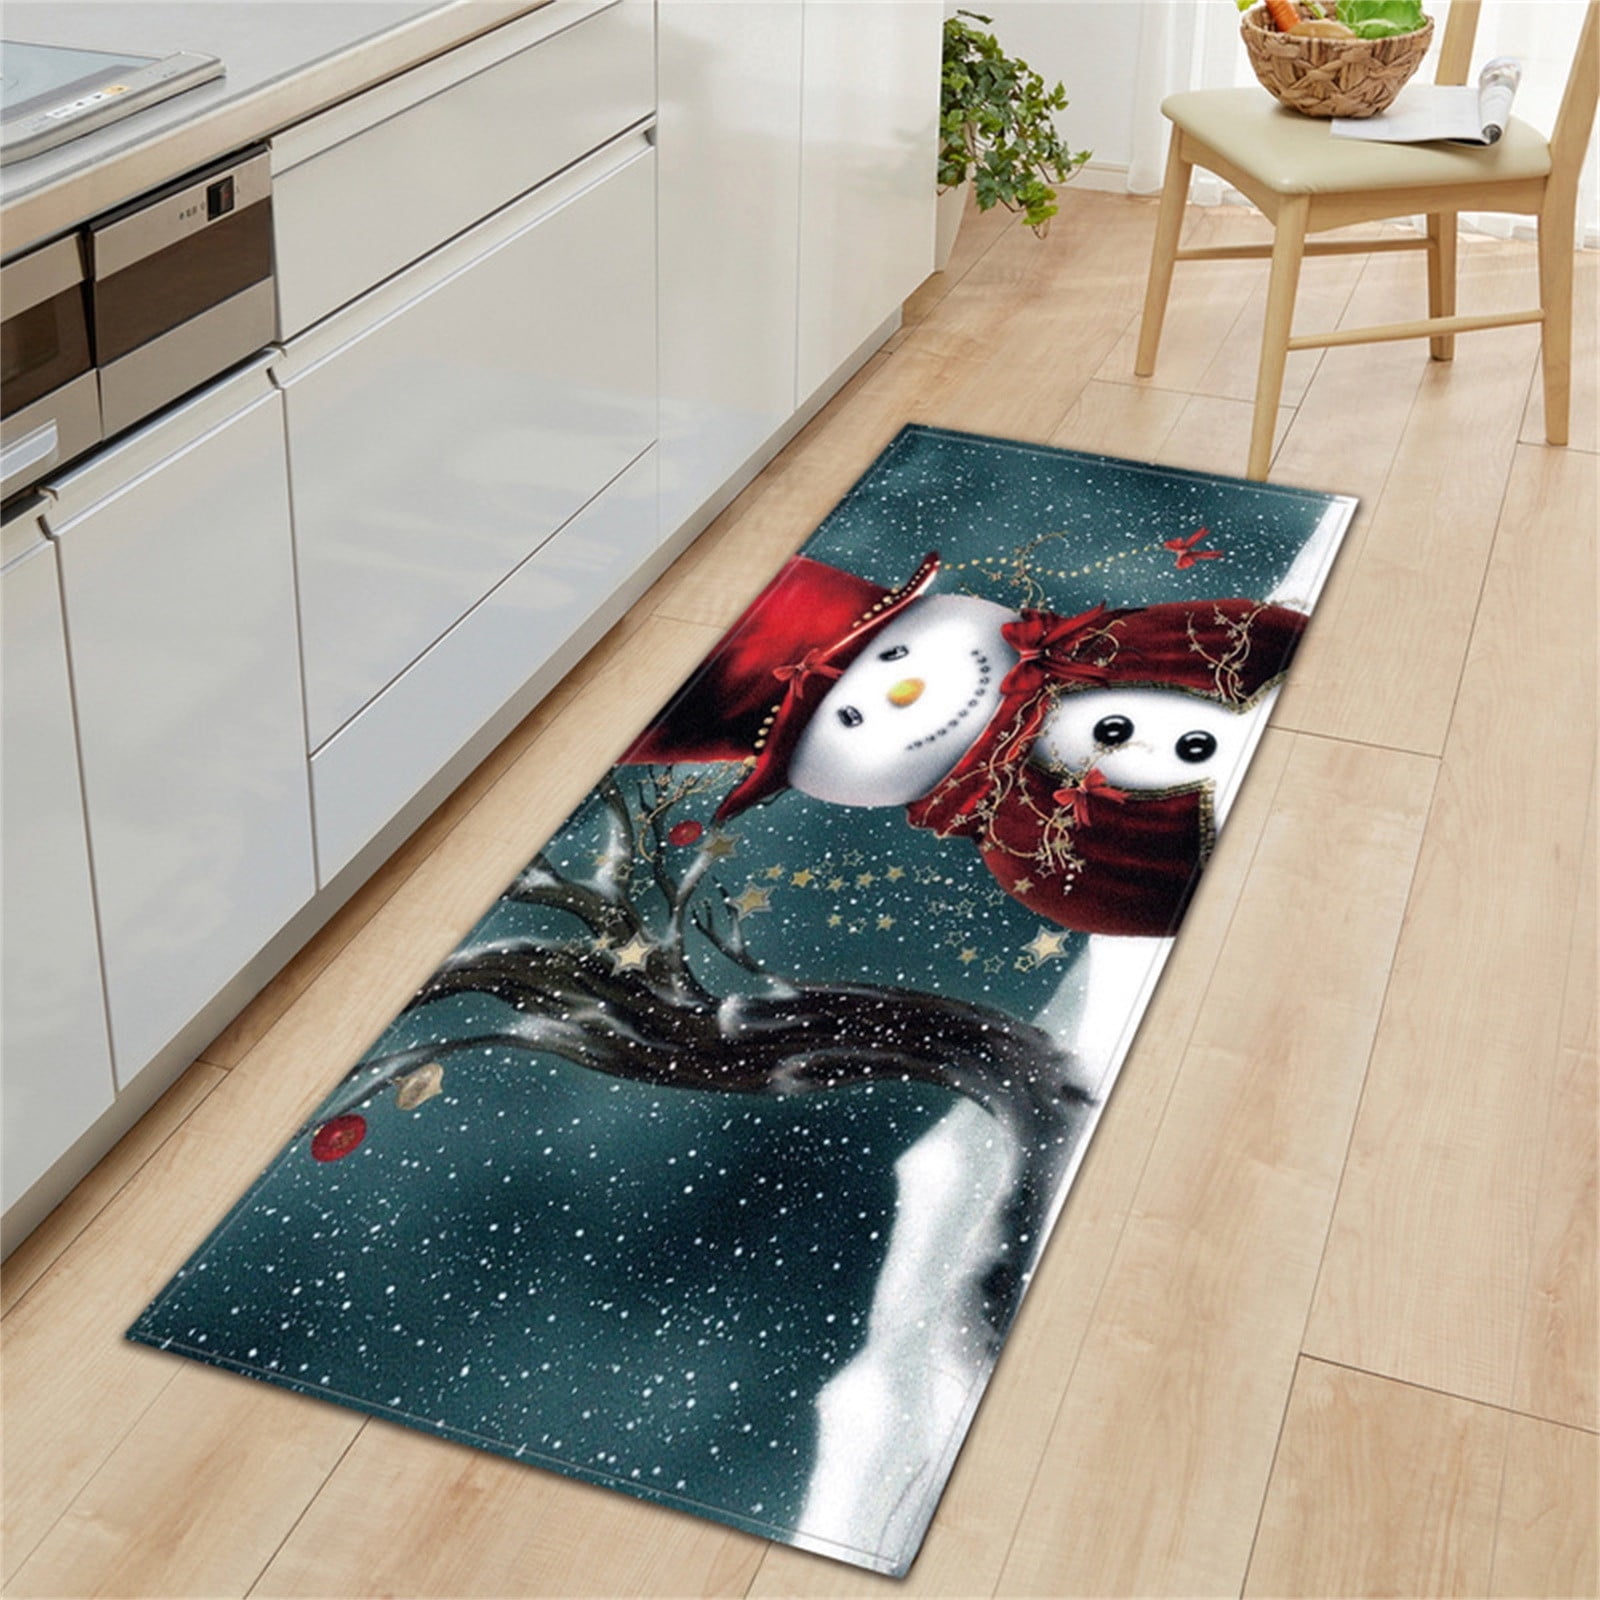 1 x Christmas Door Mats Carpet Assorted Santa Xmas Floor Rugs Home Decorations 